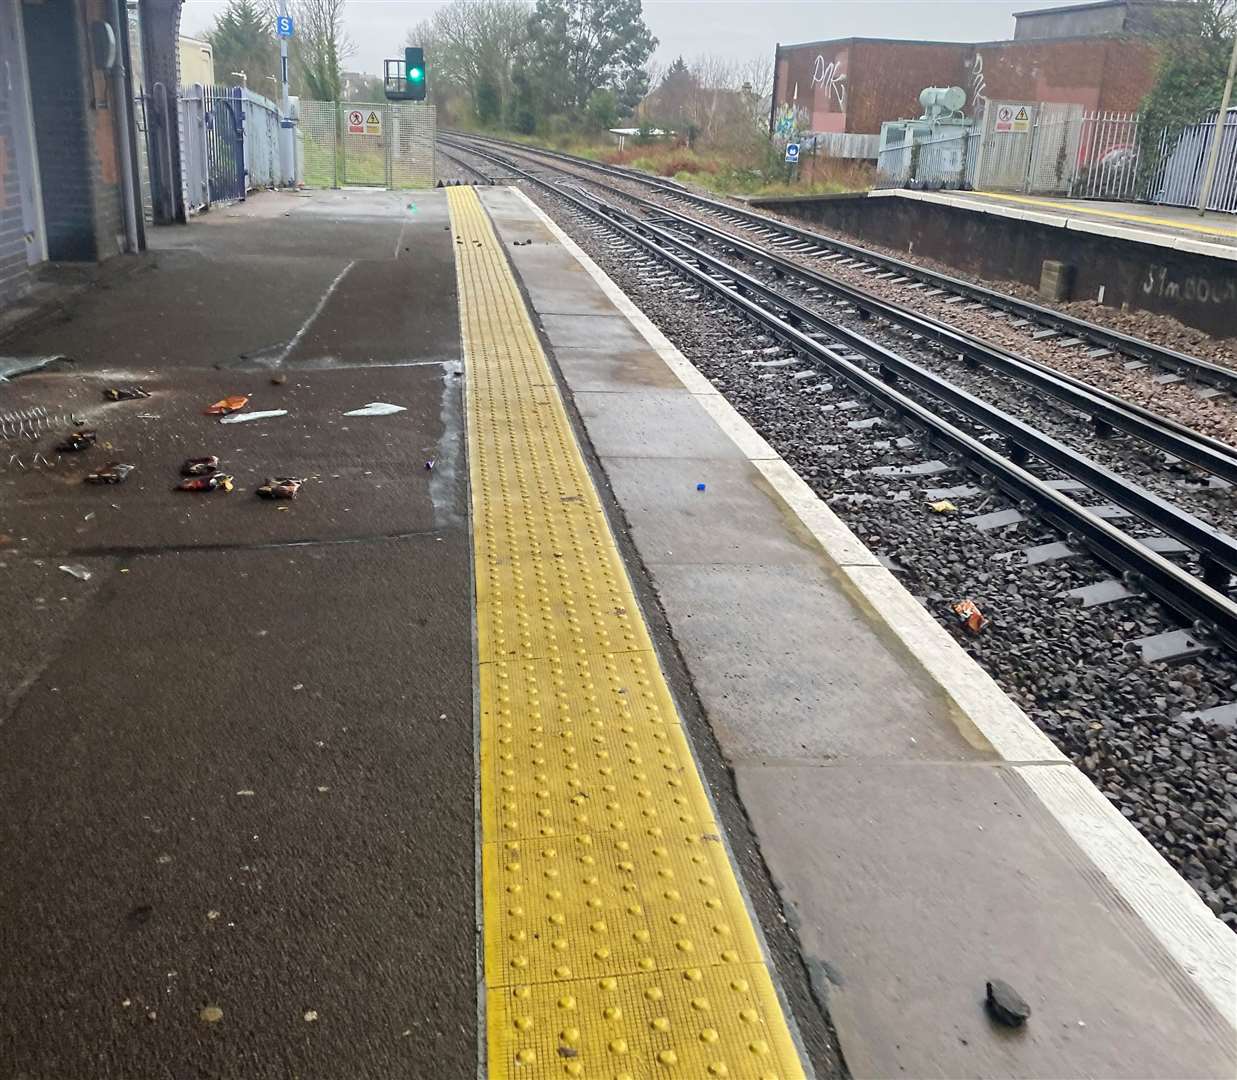 Empty crisp packets were littered on the platform. Picture: Lara Jane Martin